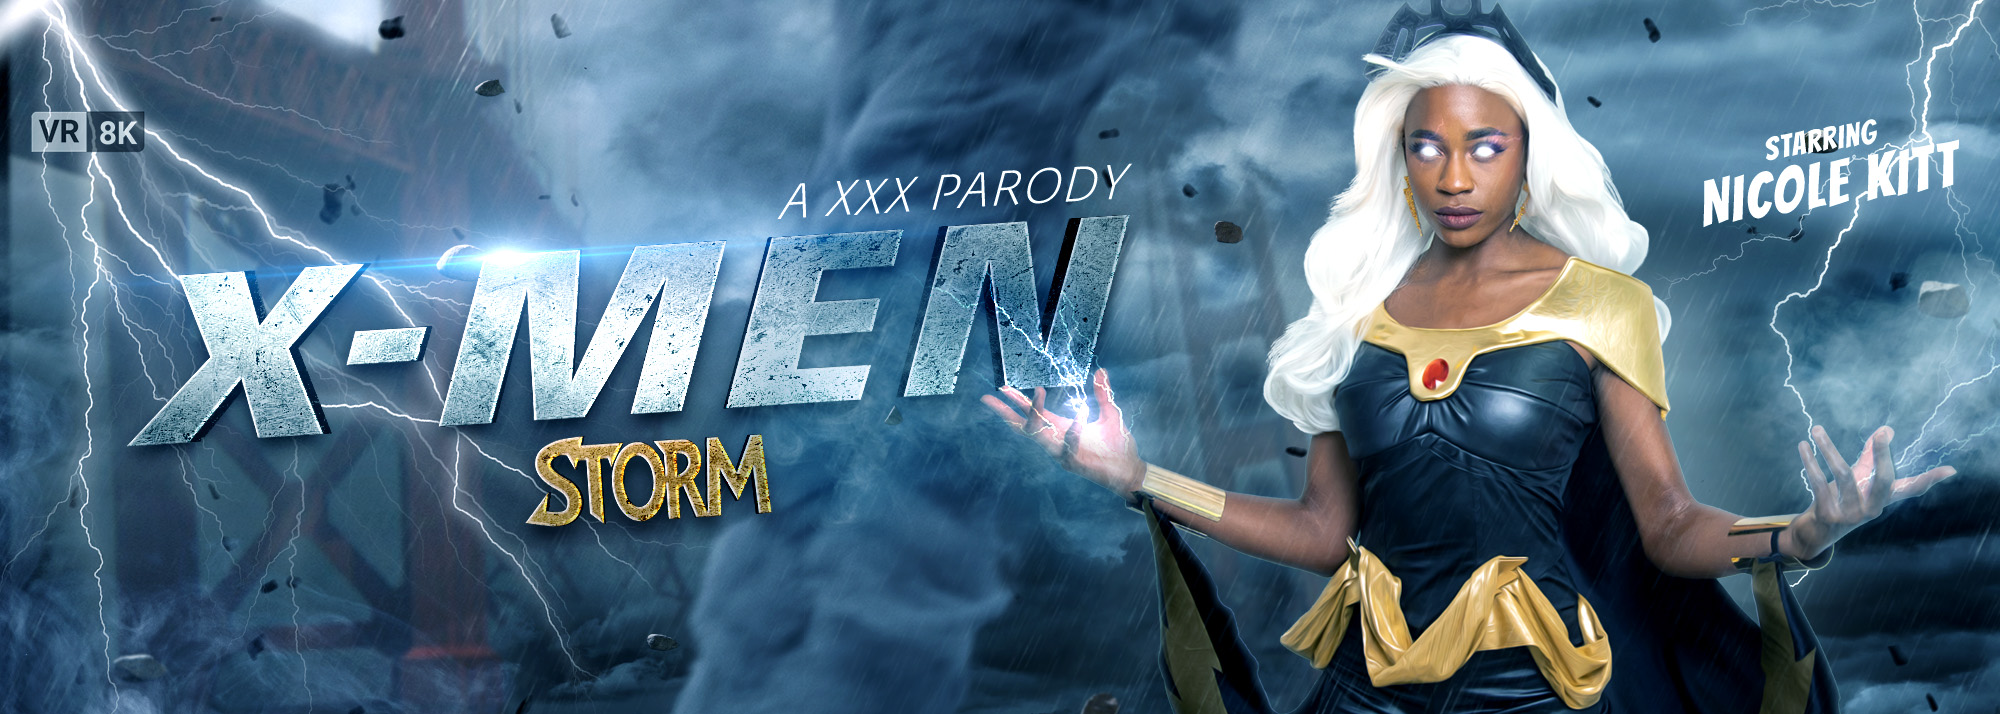 X-Men: Storm Porn Parody - VR Video, Starring: Nicole Kitt